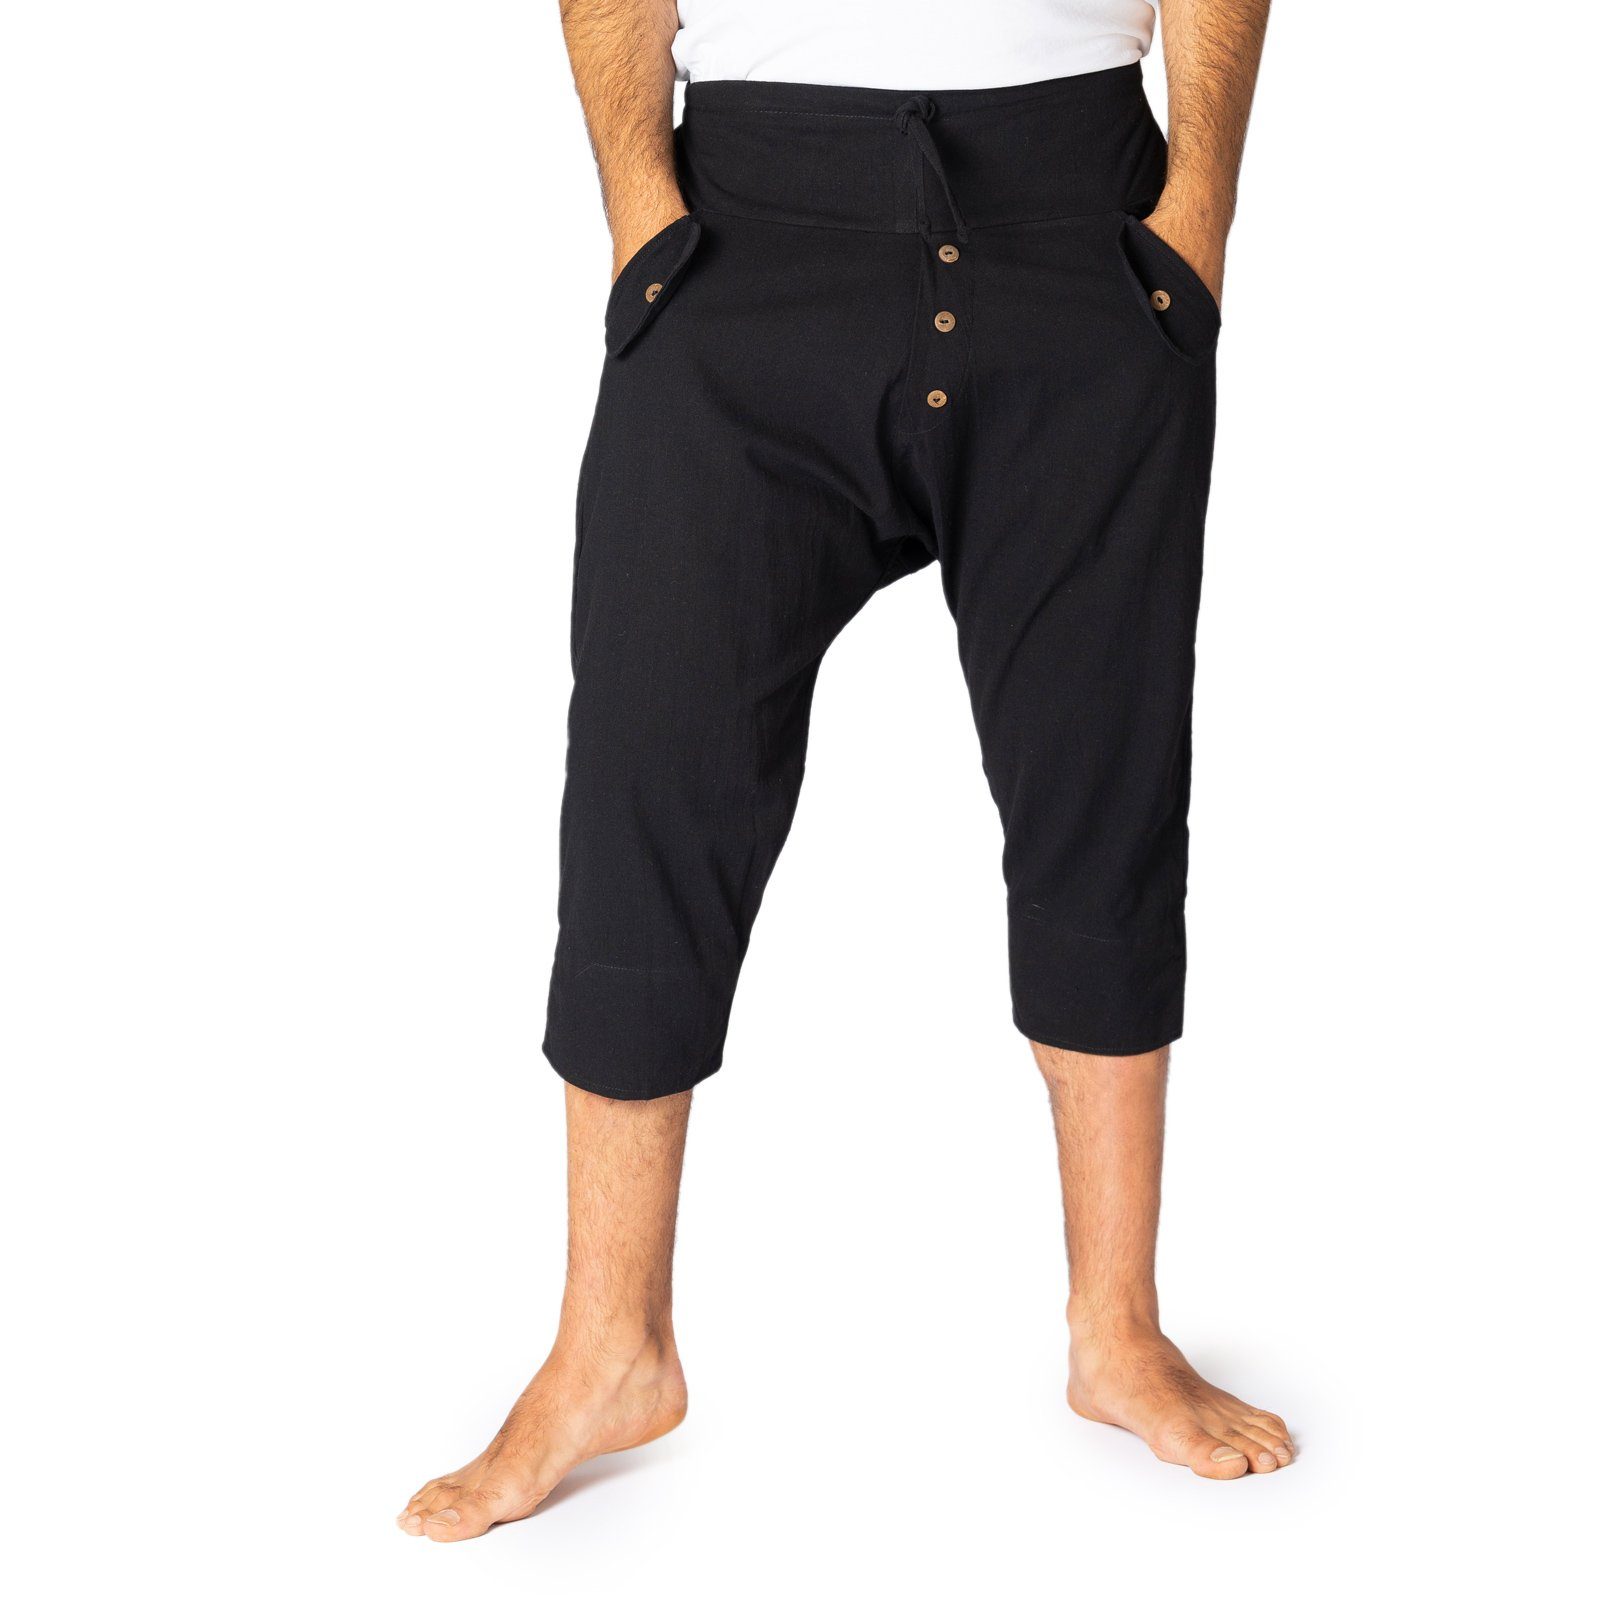 PANASIAM Strandshorts Yogi Shorts black